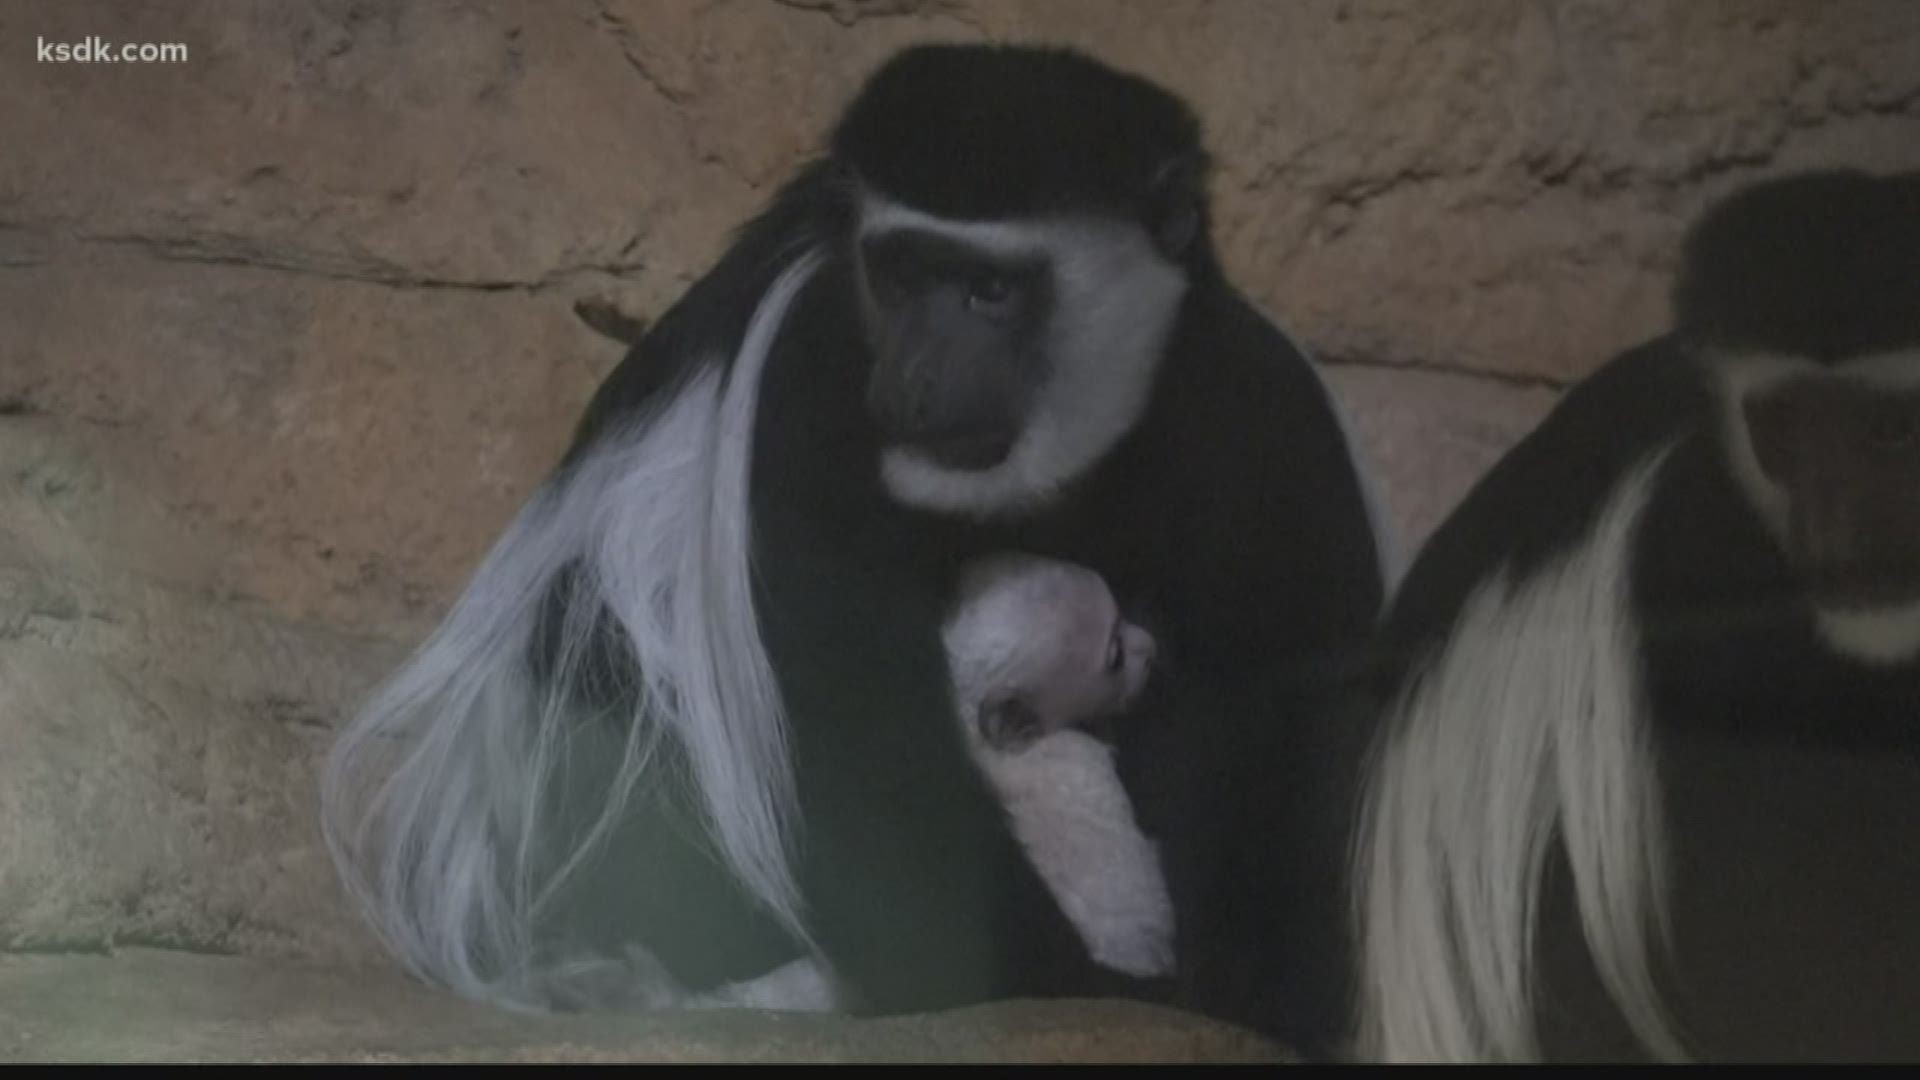 Stl news | Baby colobus monkey born at Saint Louis Zoo | www.semashow.com